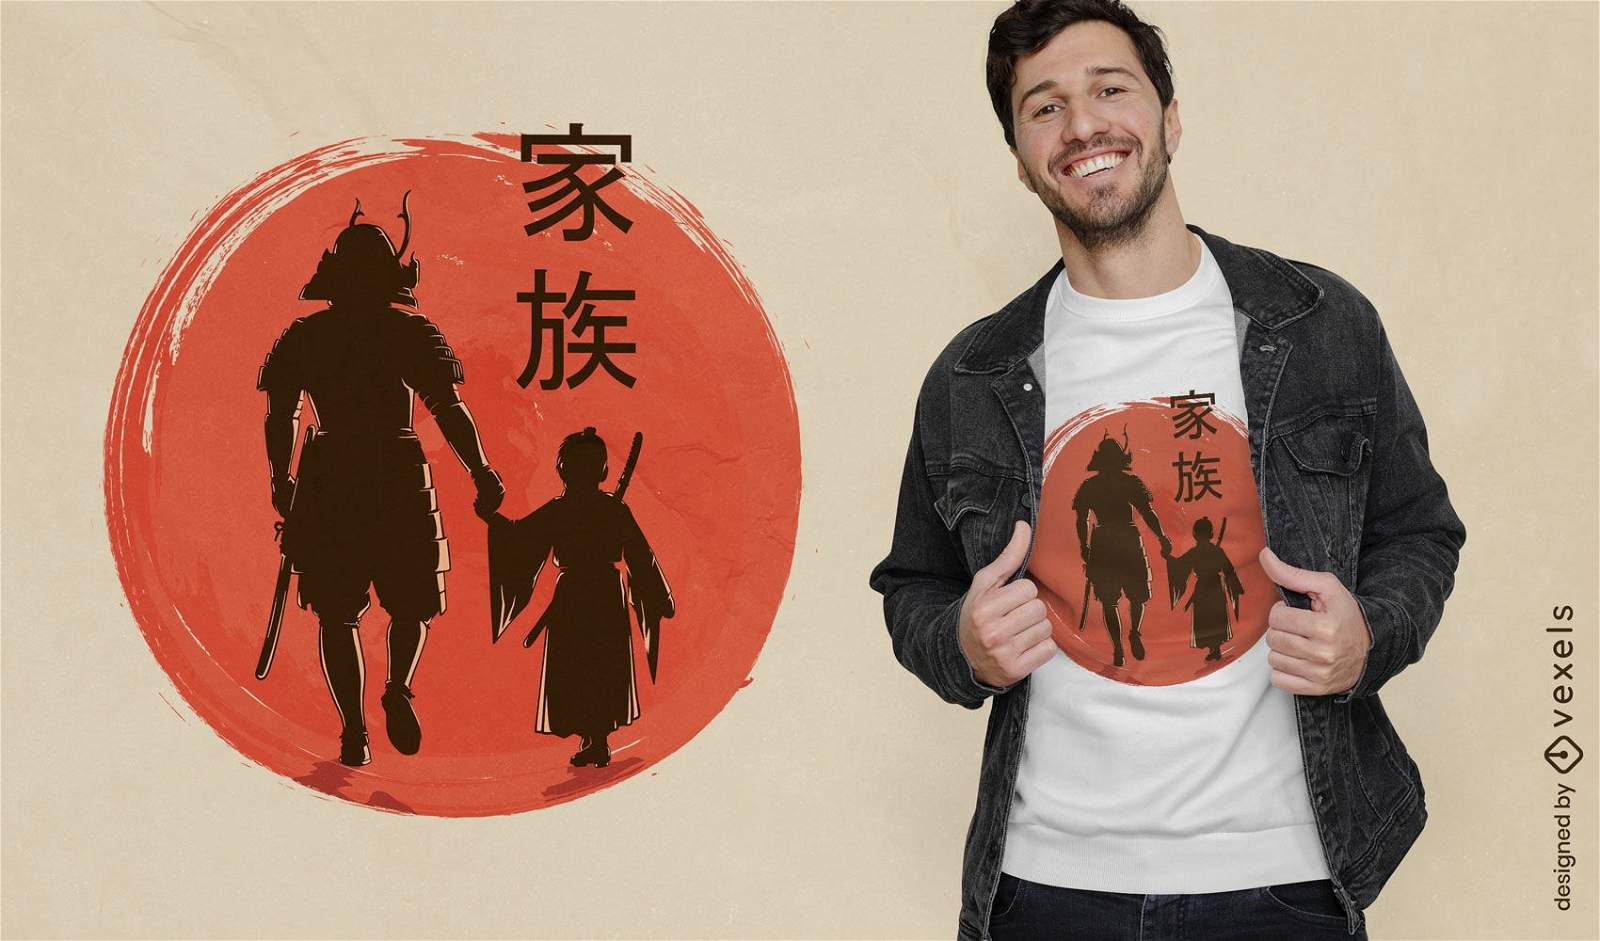 Dise?o de camiseta samurai padre e hijo